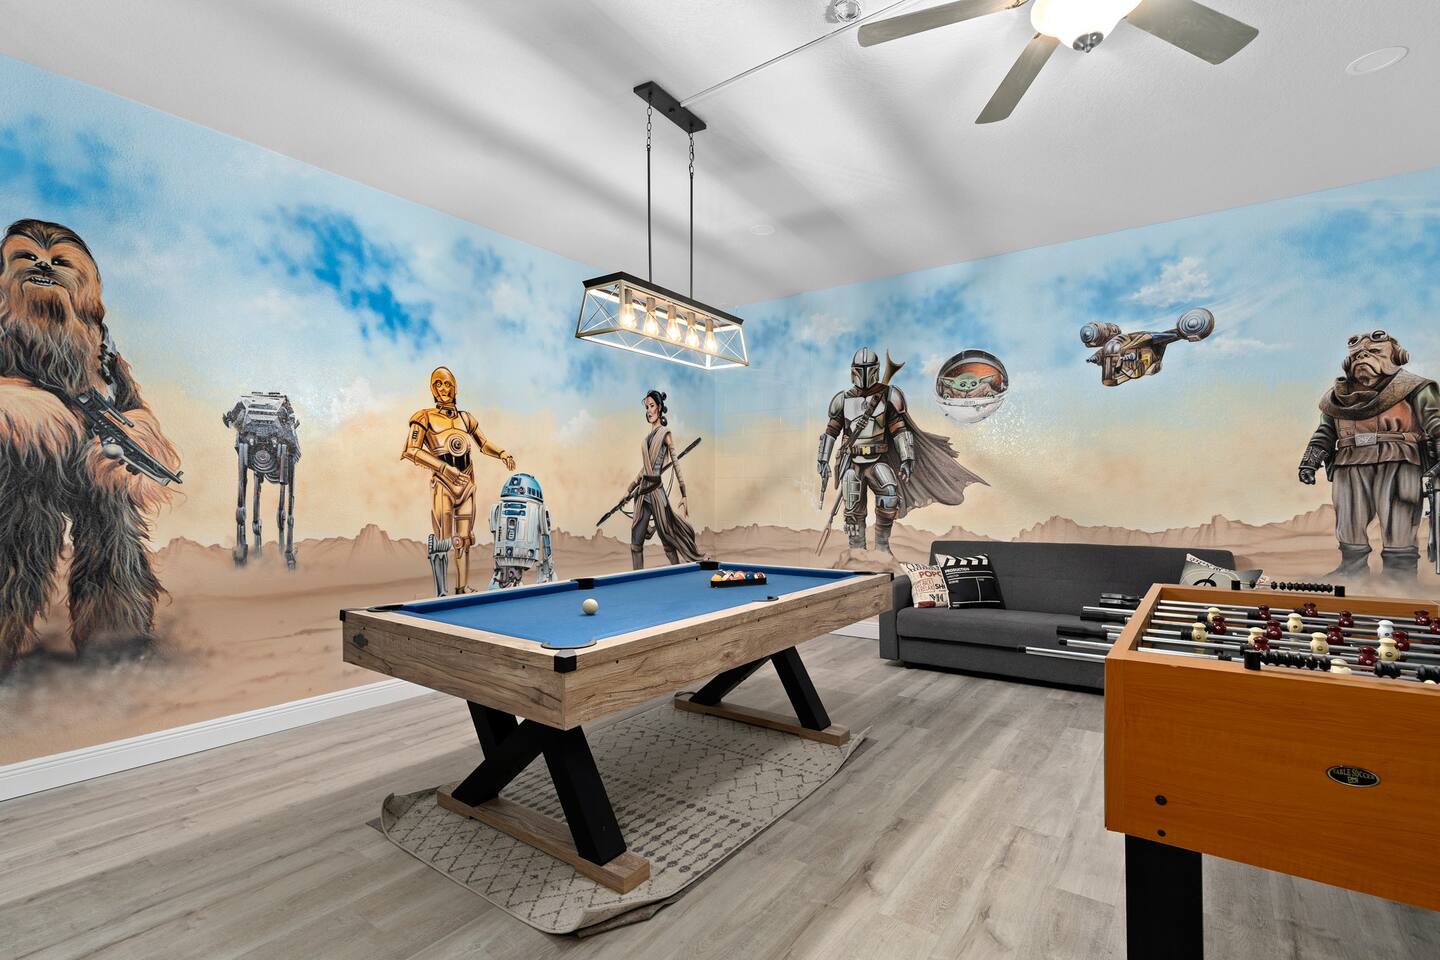 Star wars-themed gaming room 